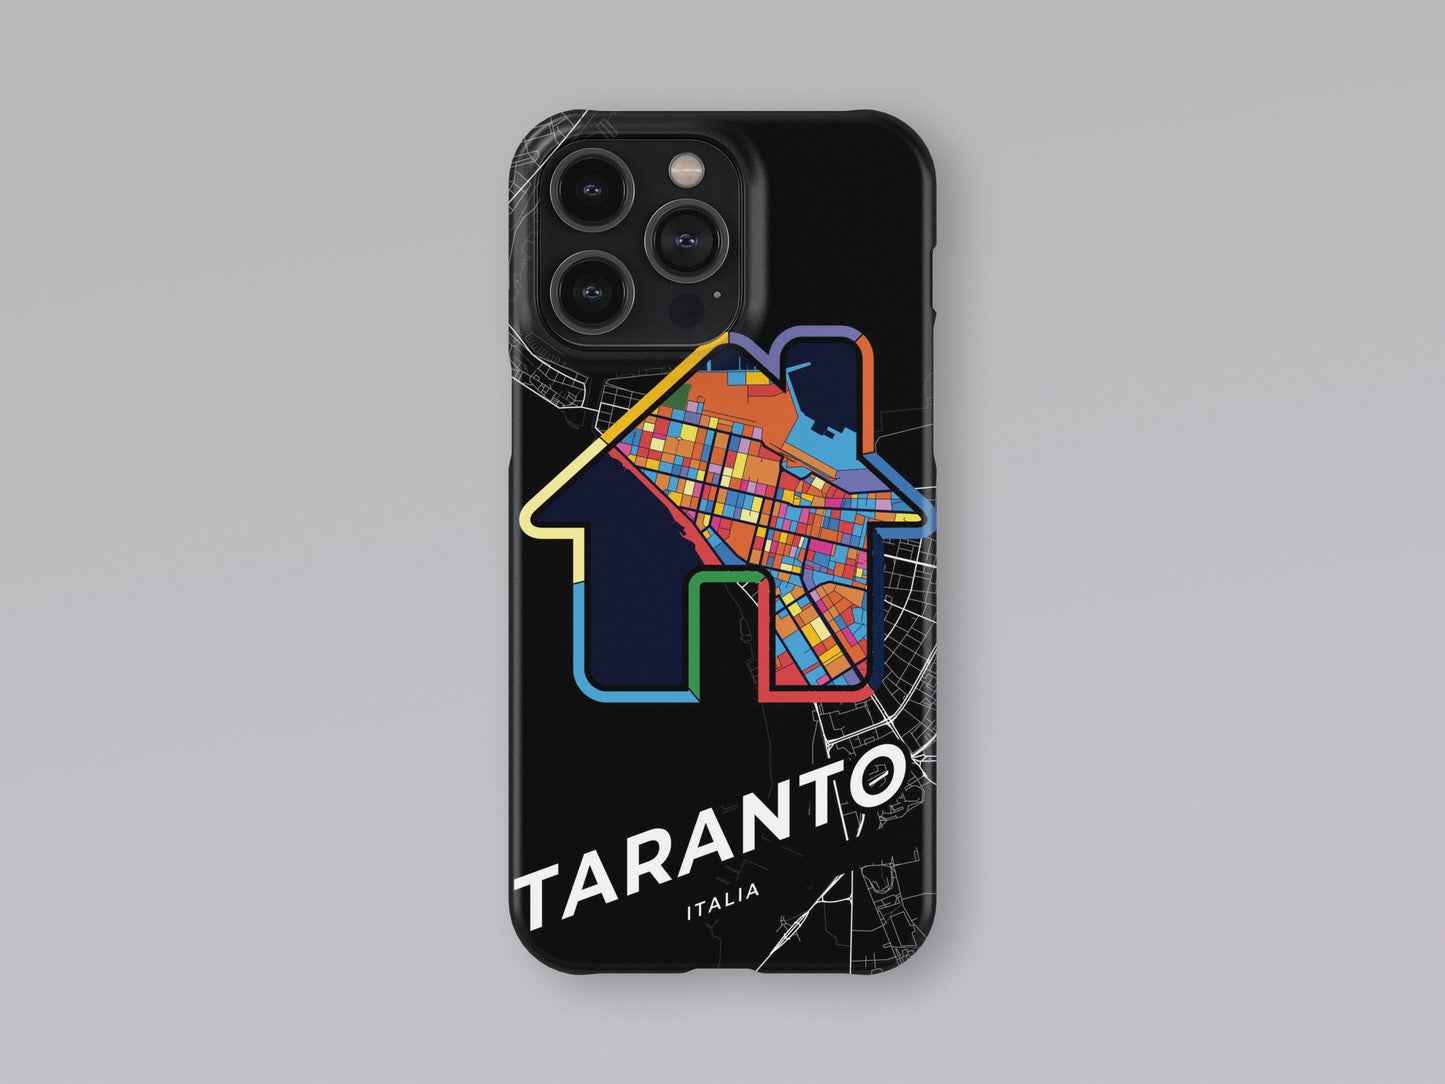 Taranto Italy slim phone case with colorful icon 3